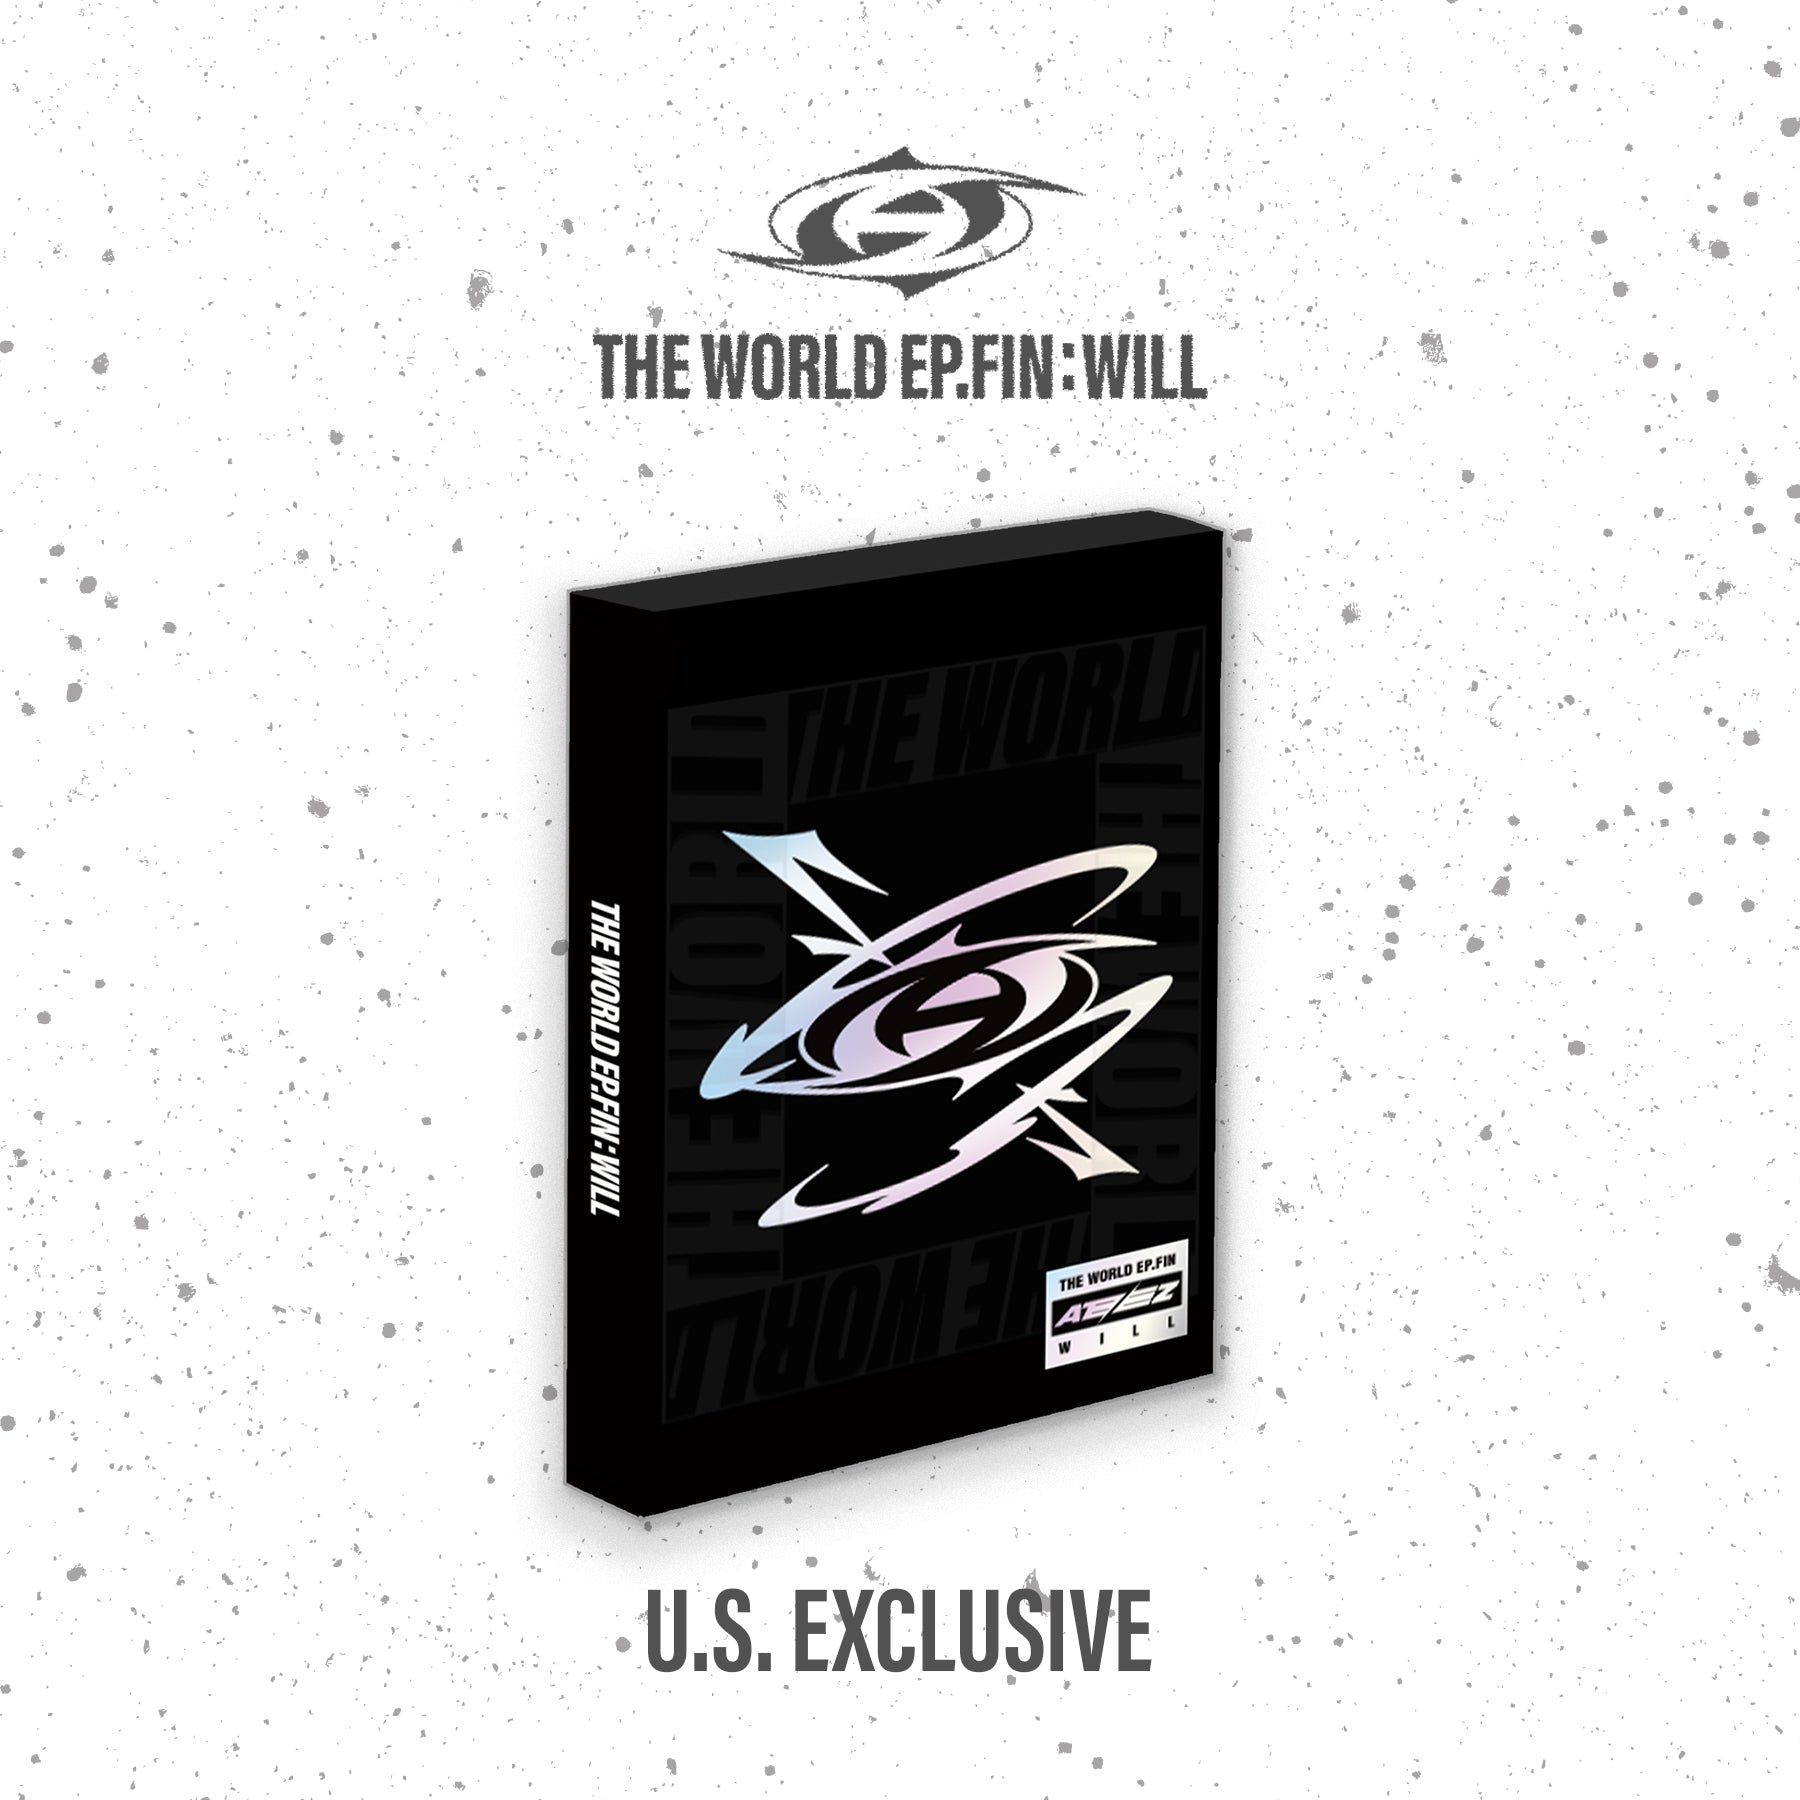 ATEEZ 에이티즈 - 9th Mini-Album 'THE WORLD EP.2 : OUTLAW' (Korean Version) –  KLOUD K-Pop Store